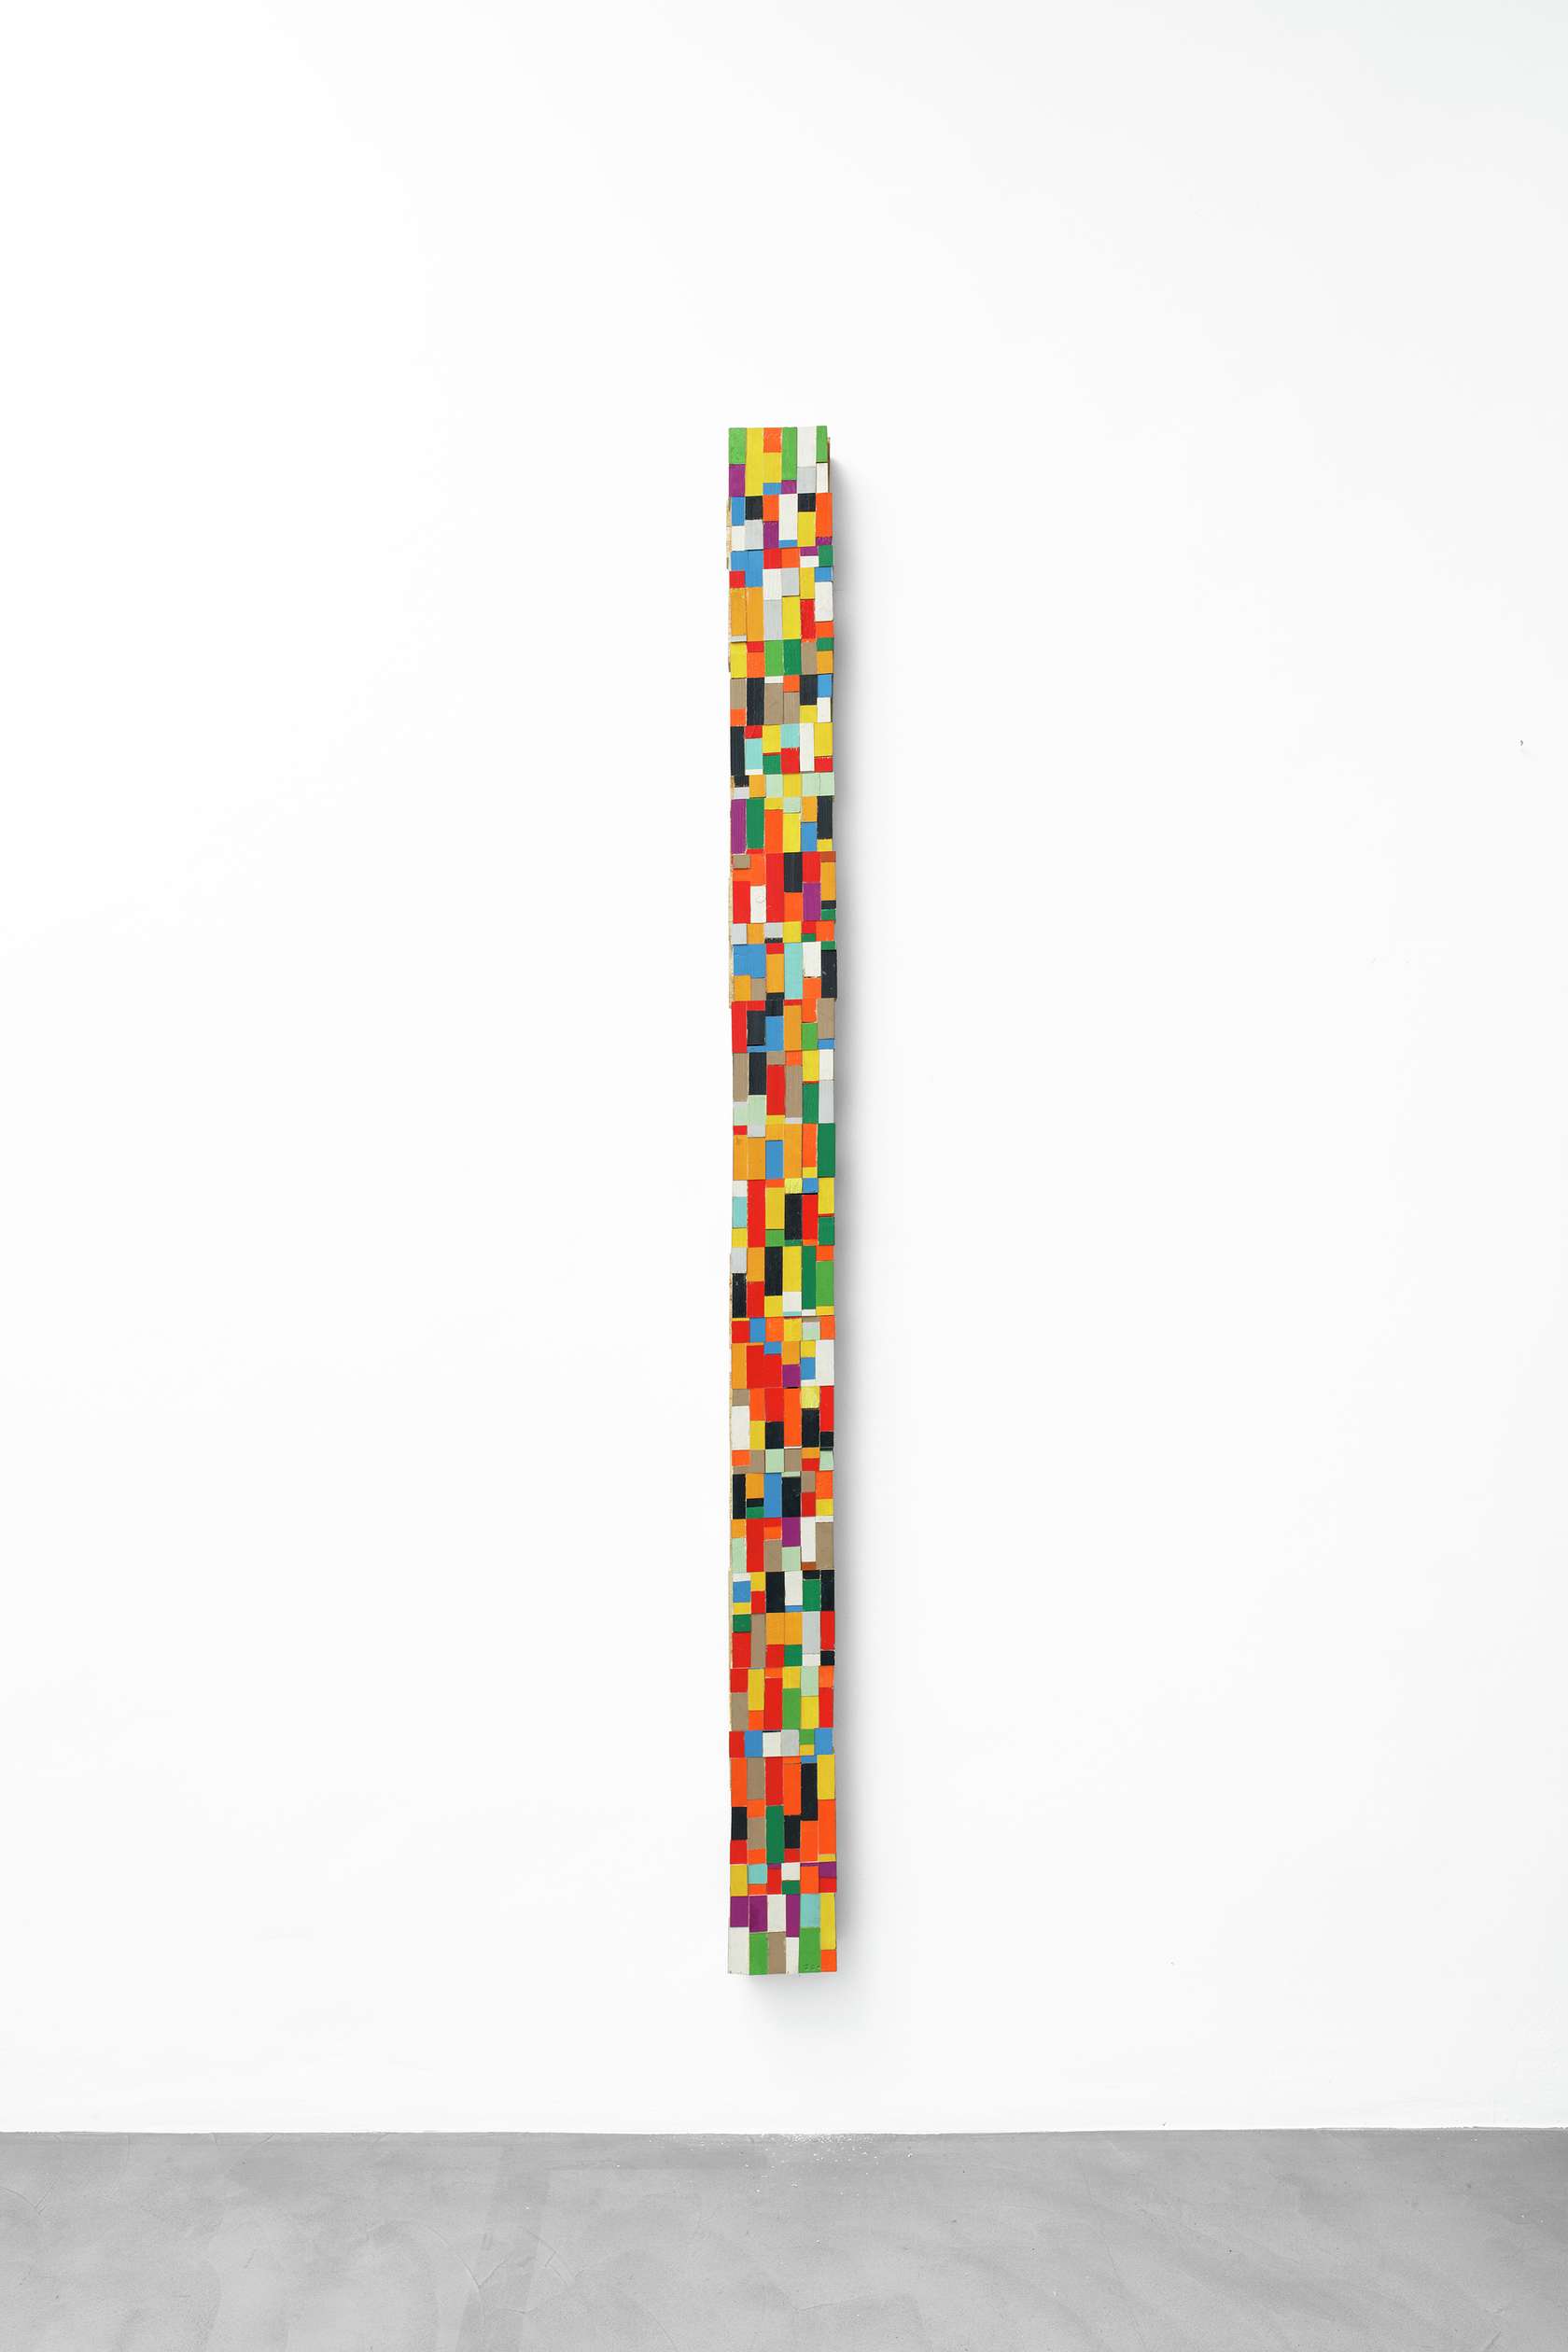 Beat Zoderer, Massstab, 2005 Assemblage de bois peint190 × 13 × 7.5 cm / 74 6/8 × 5 1/8 × 3  in.